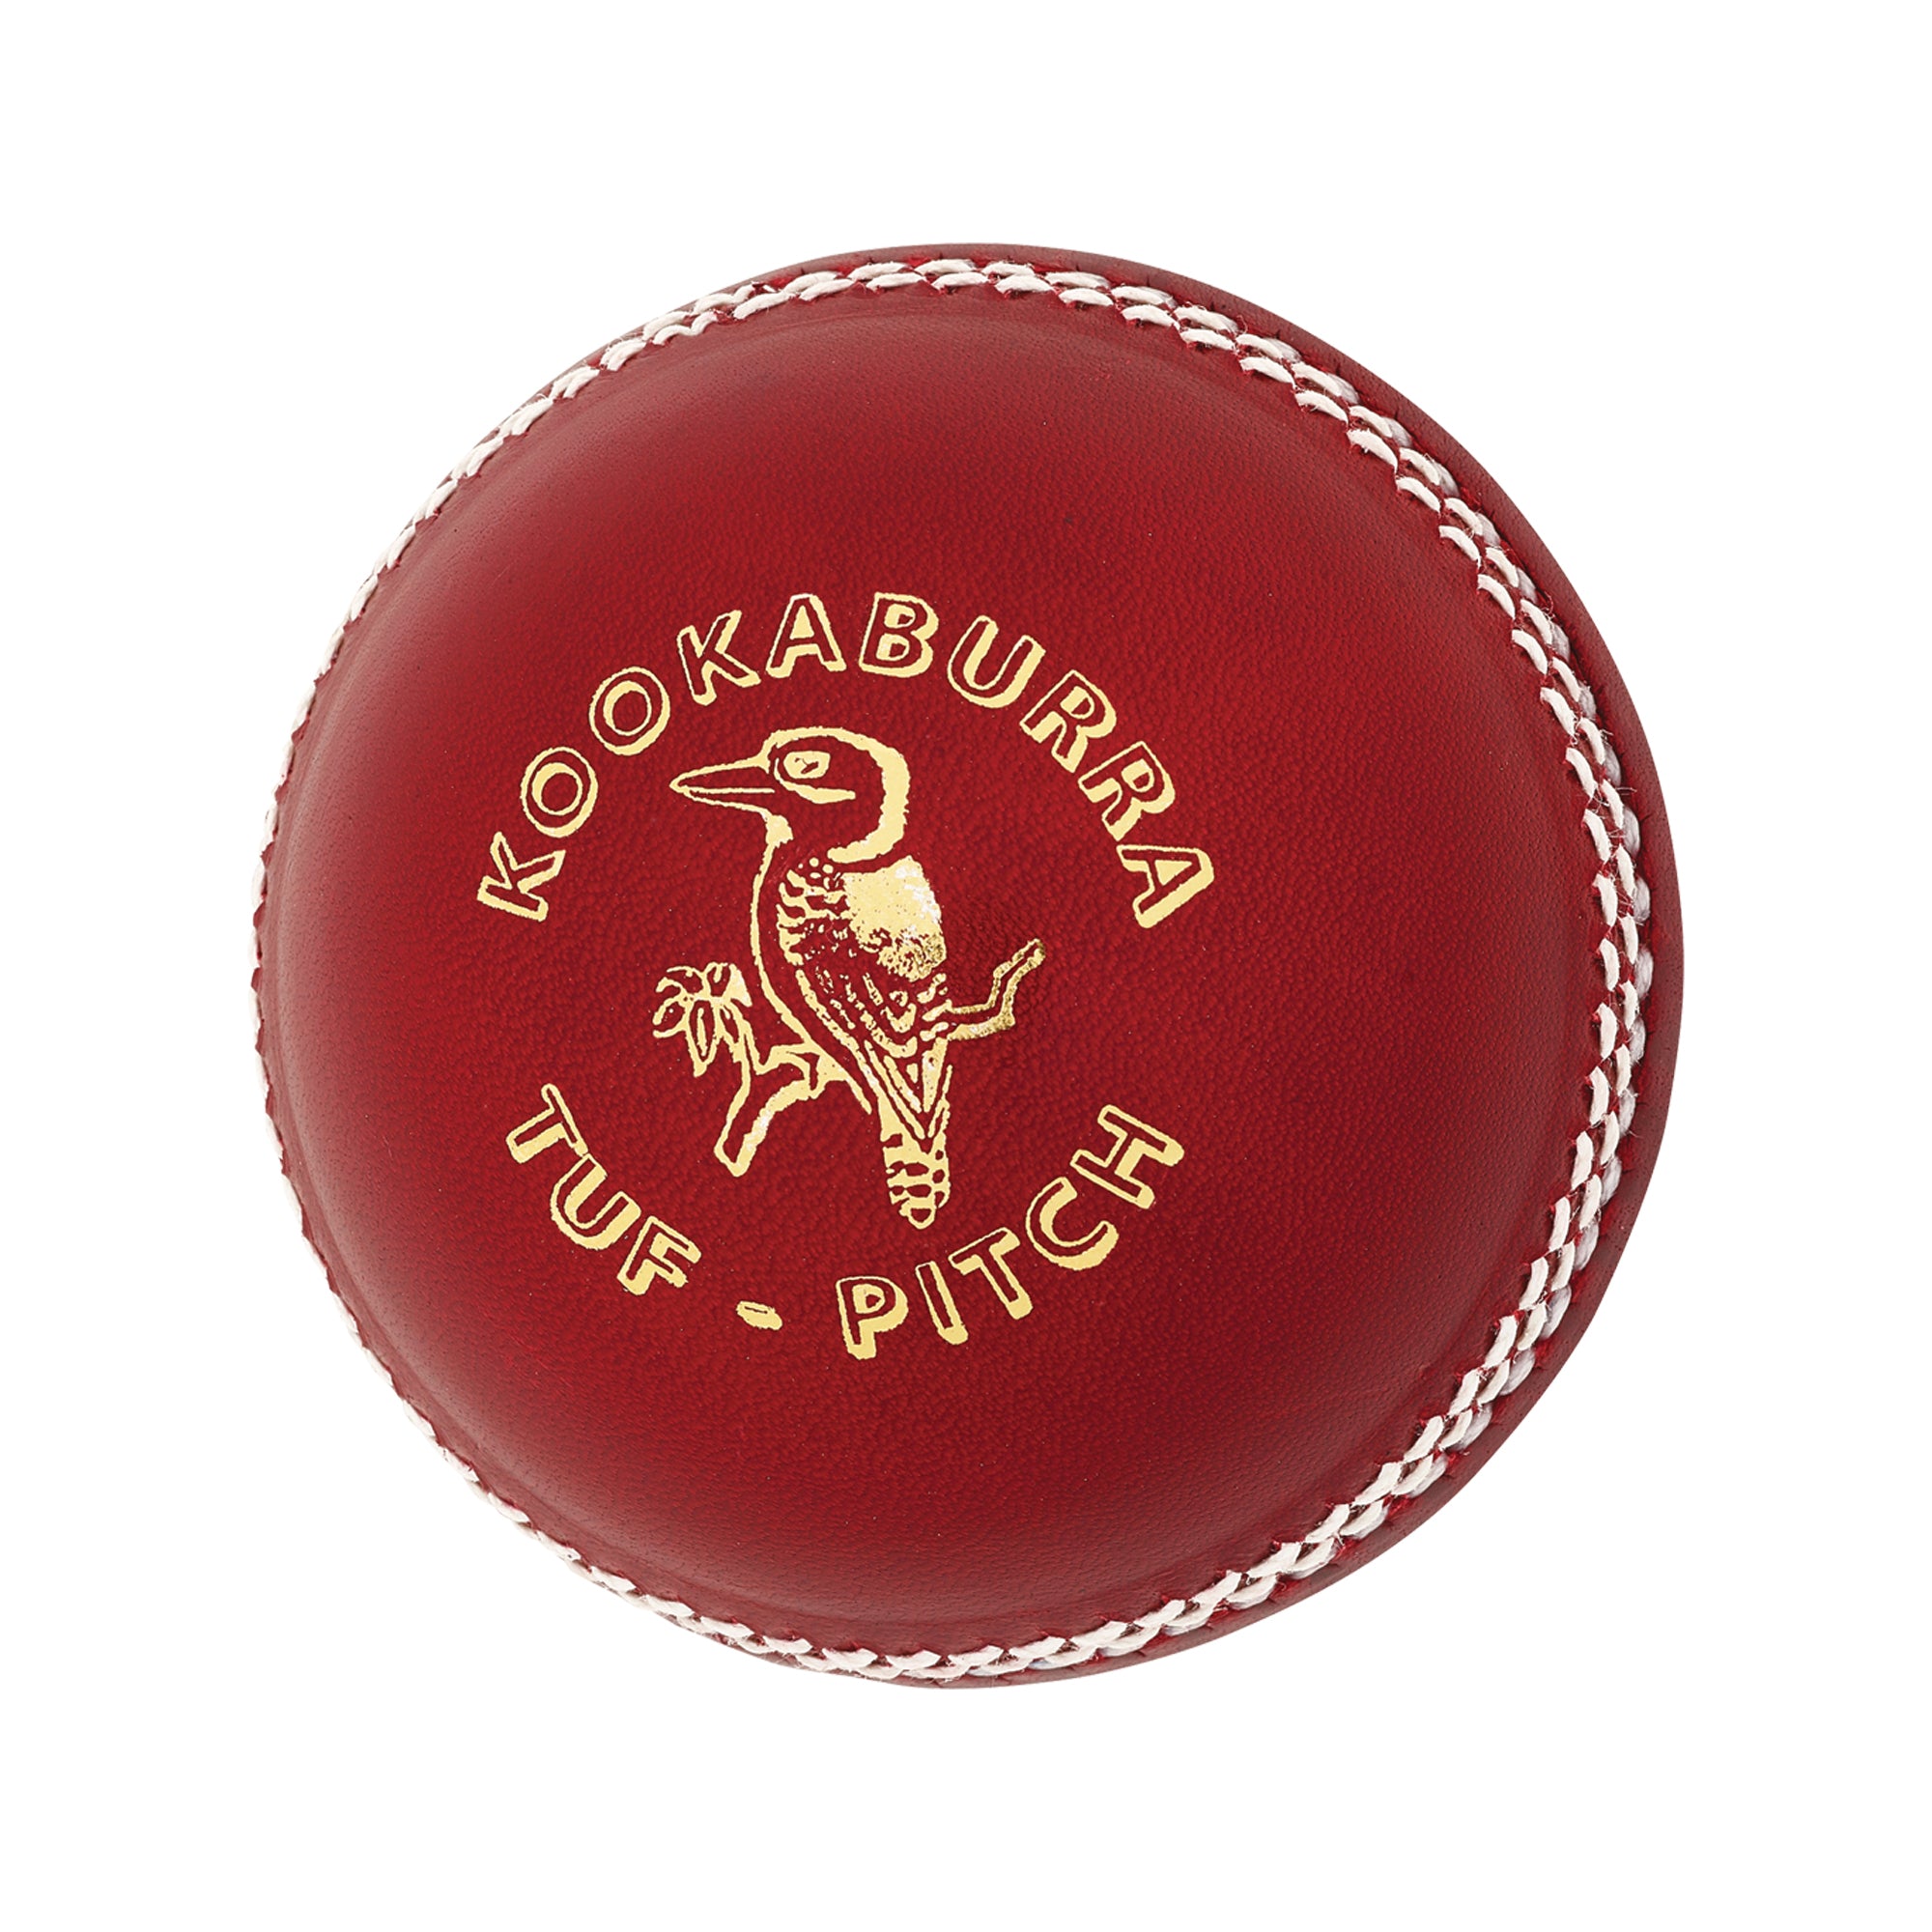 Kookaburra Turf Pitch 2 Piece Red Cricket Ball